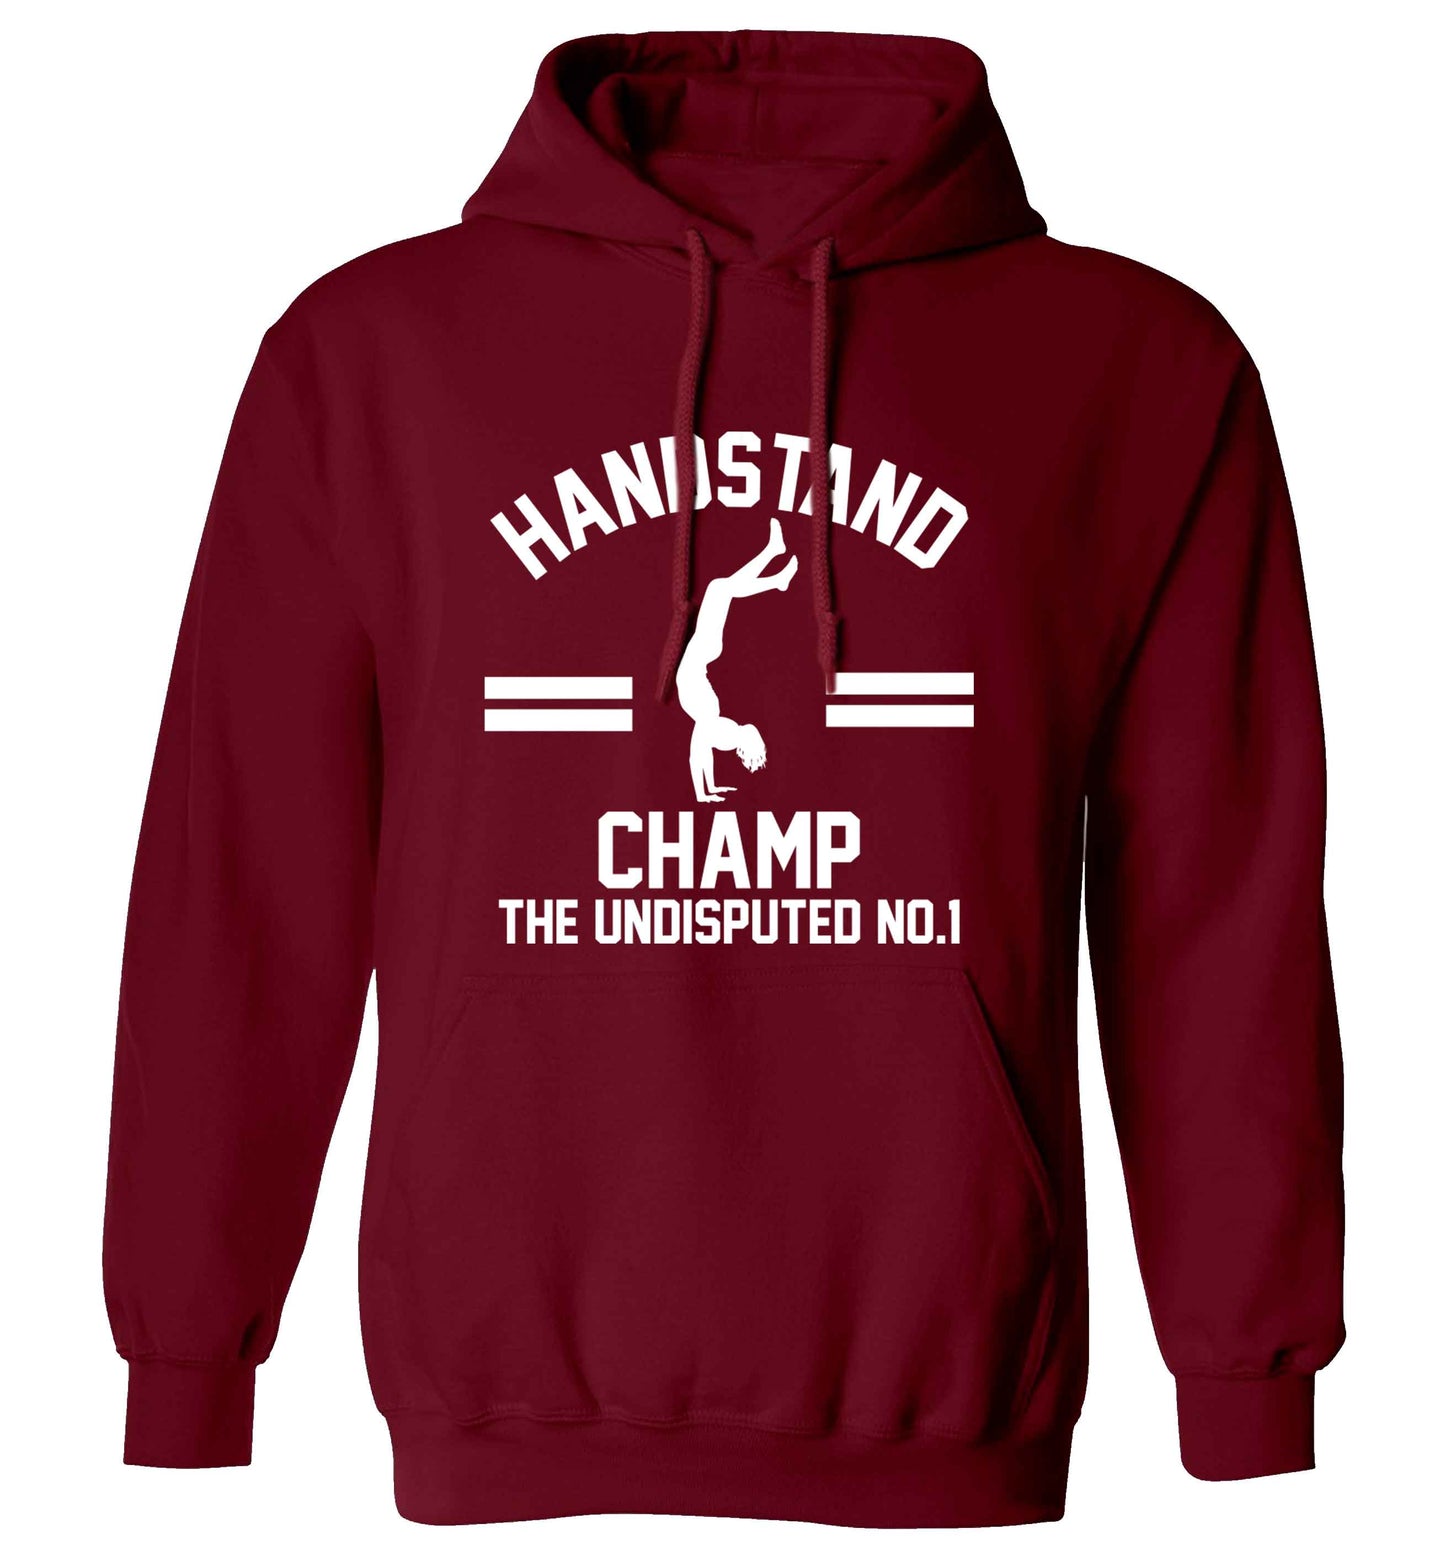 Undisputed handstand championship no.1  adults unisex maroon hoodie 2XL